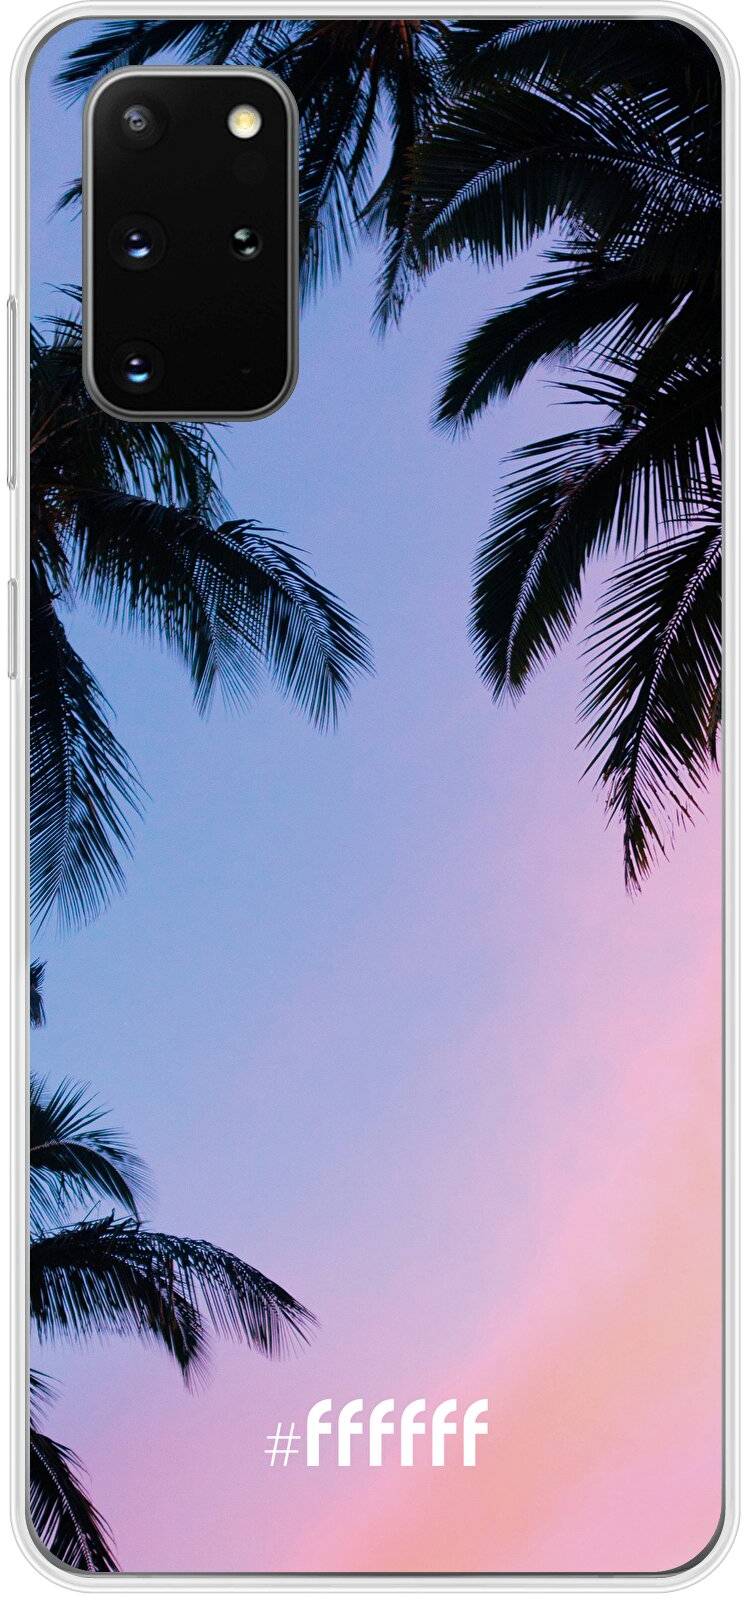 Sunset Palms Galaxy S20+